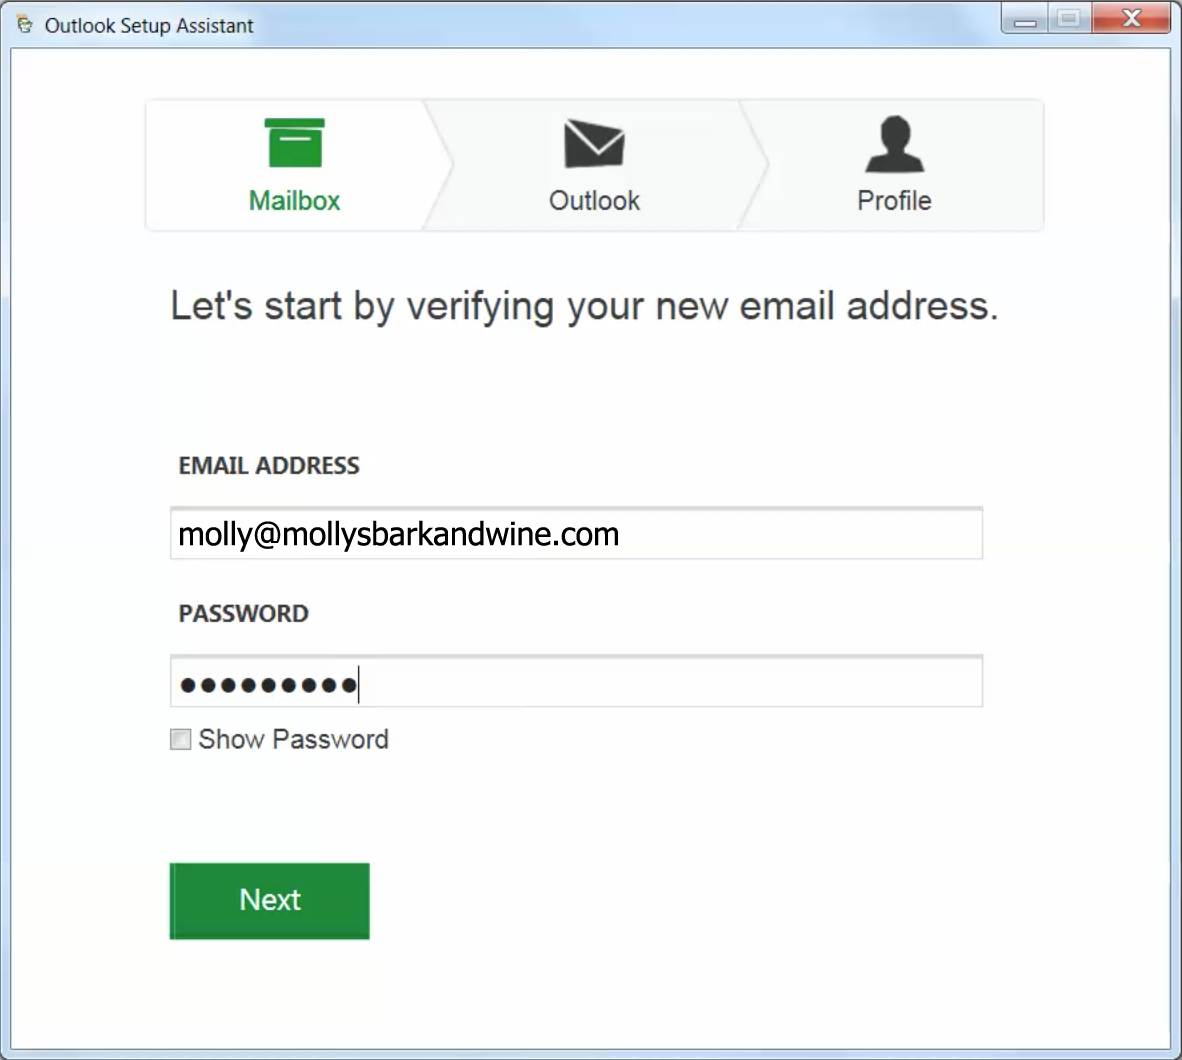 Enter email address, password, click Next.